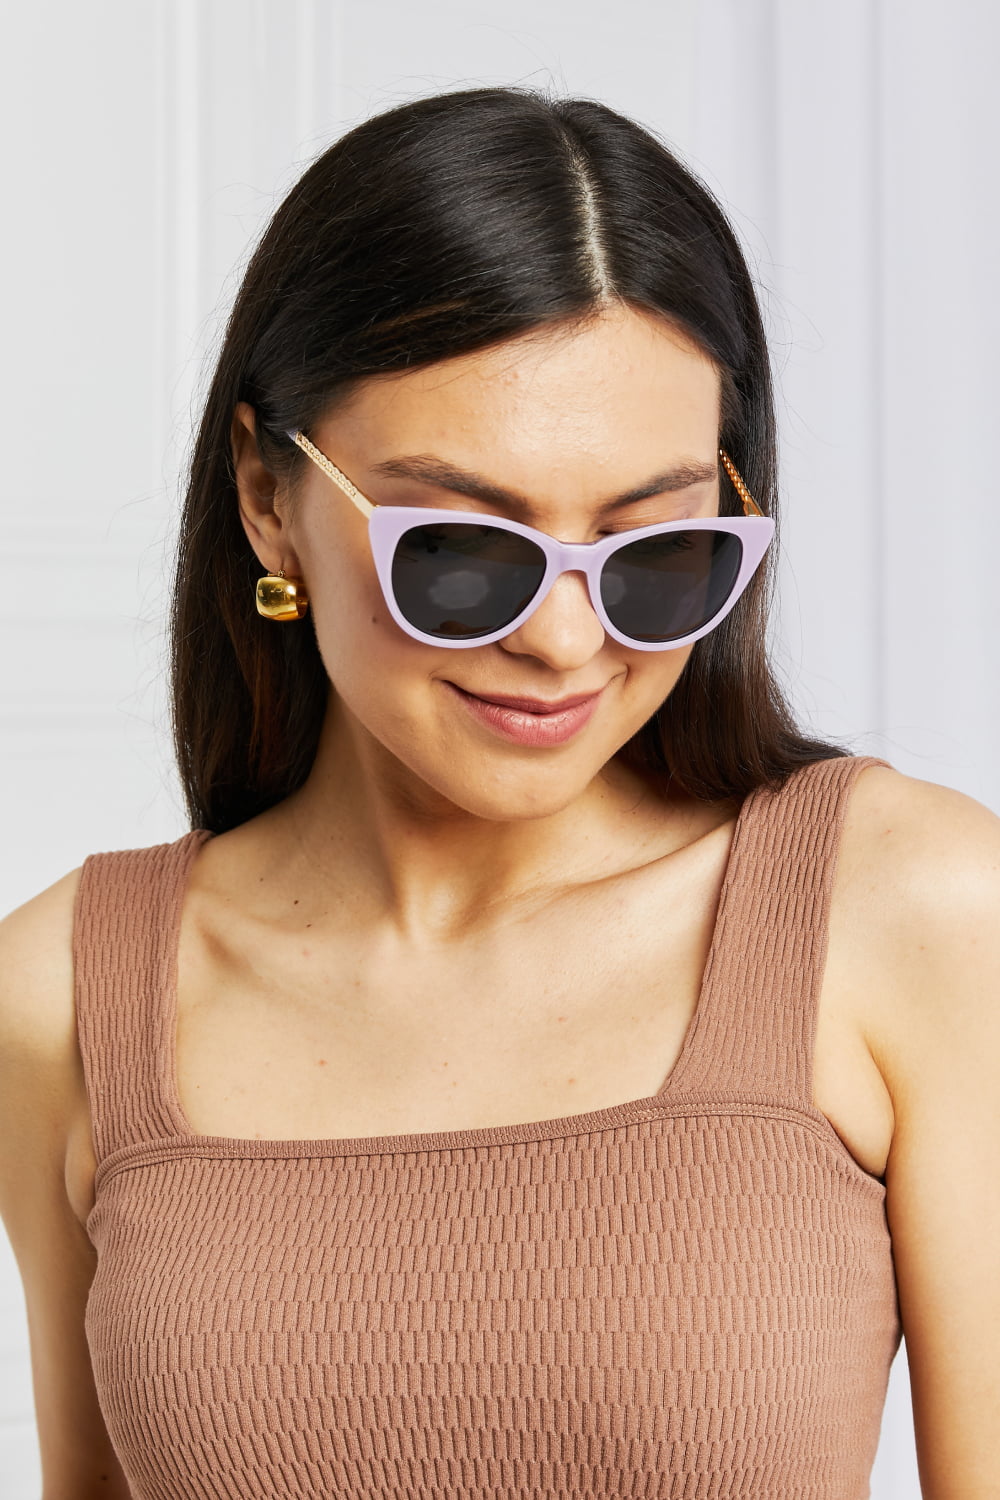 Cat-Eye Acetate Frame Sunglasses One Size Sunglasses by Vim&Vigor | Vim&Vigor Boutique